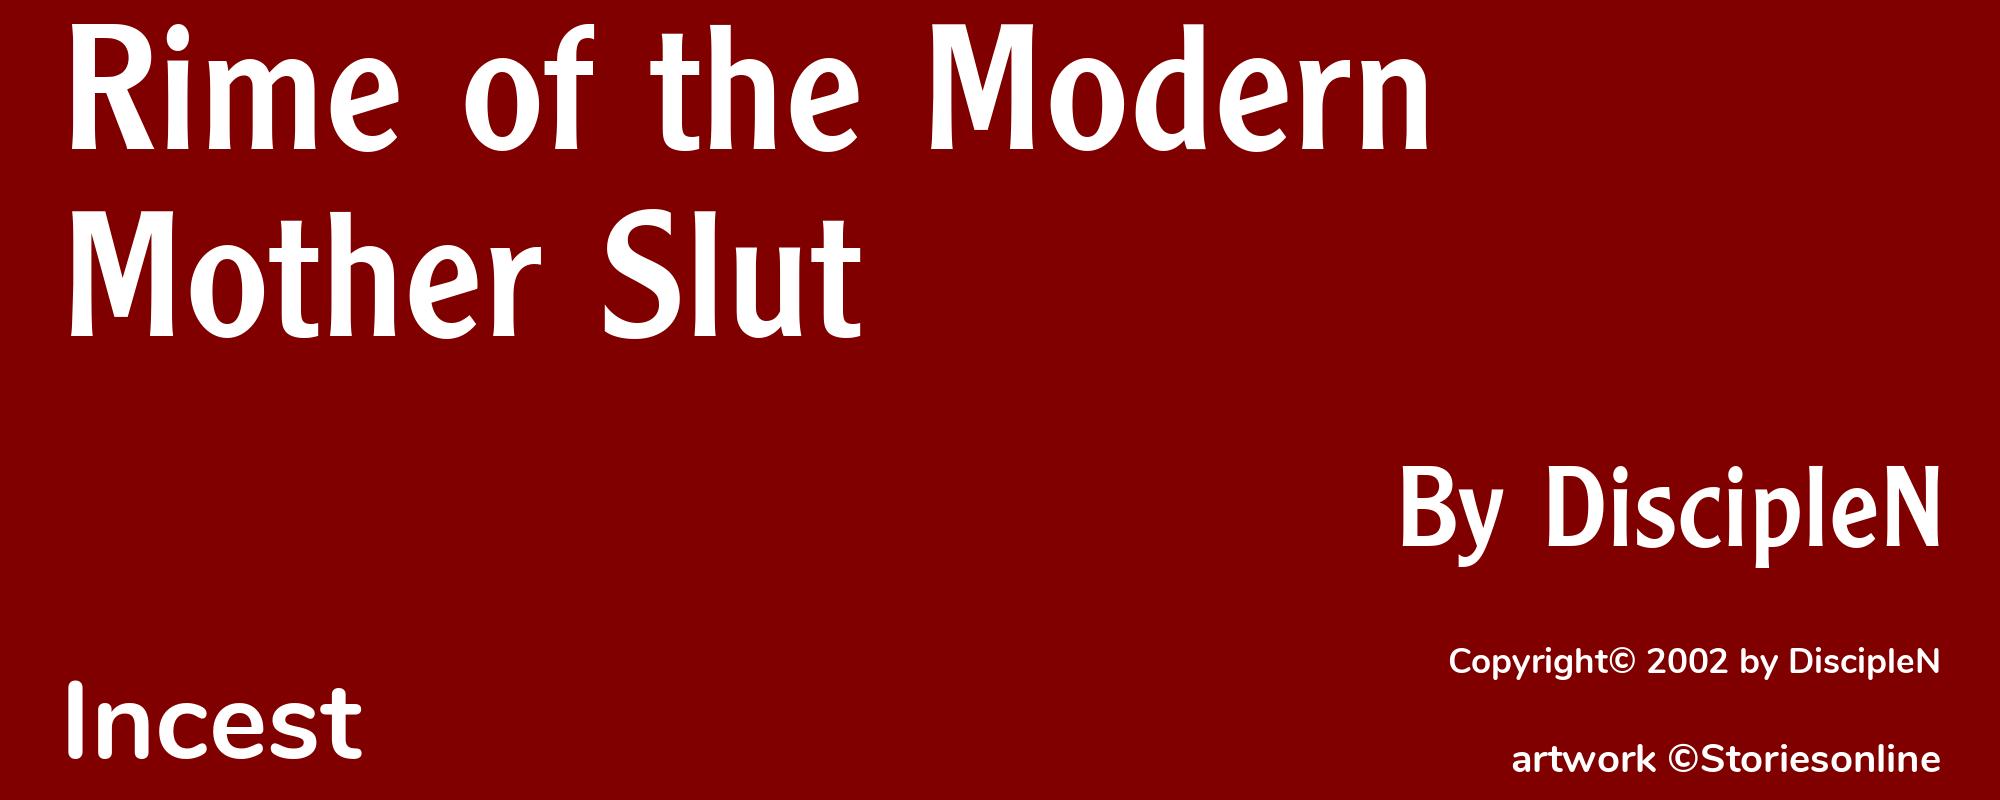 Rime of the Modern Mother Slut - Cover